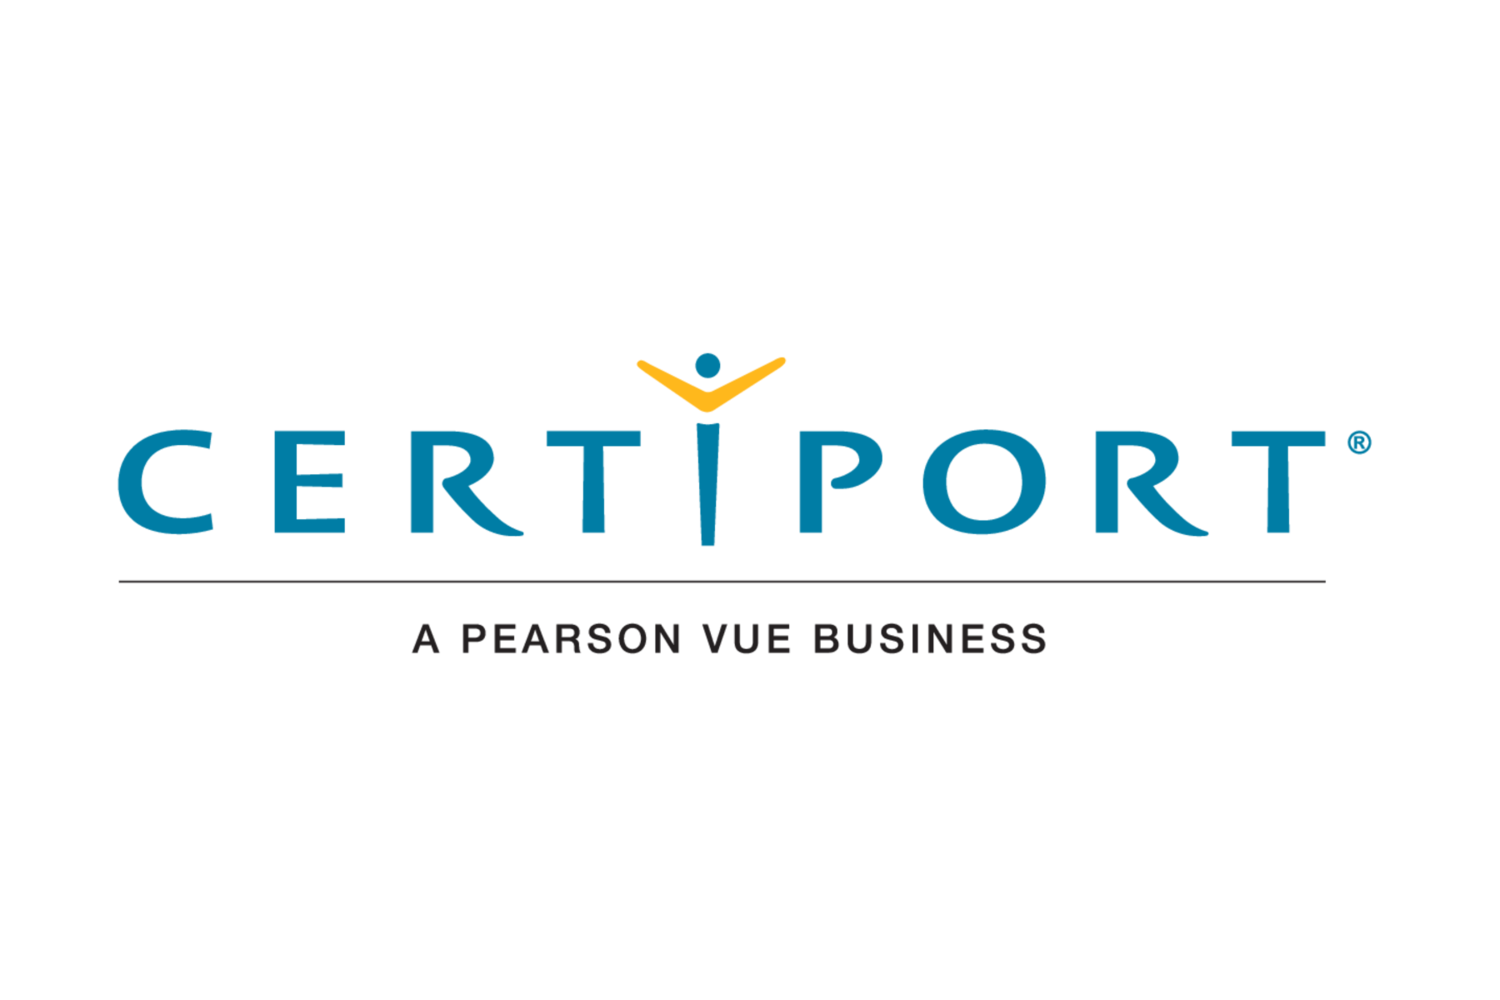 Certiport - A Pearson Vue Business logo